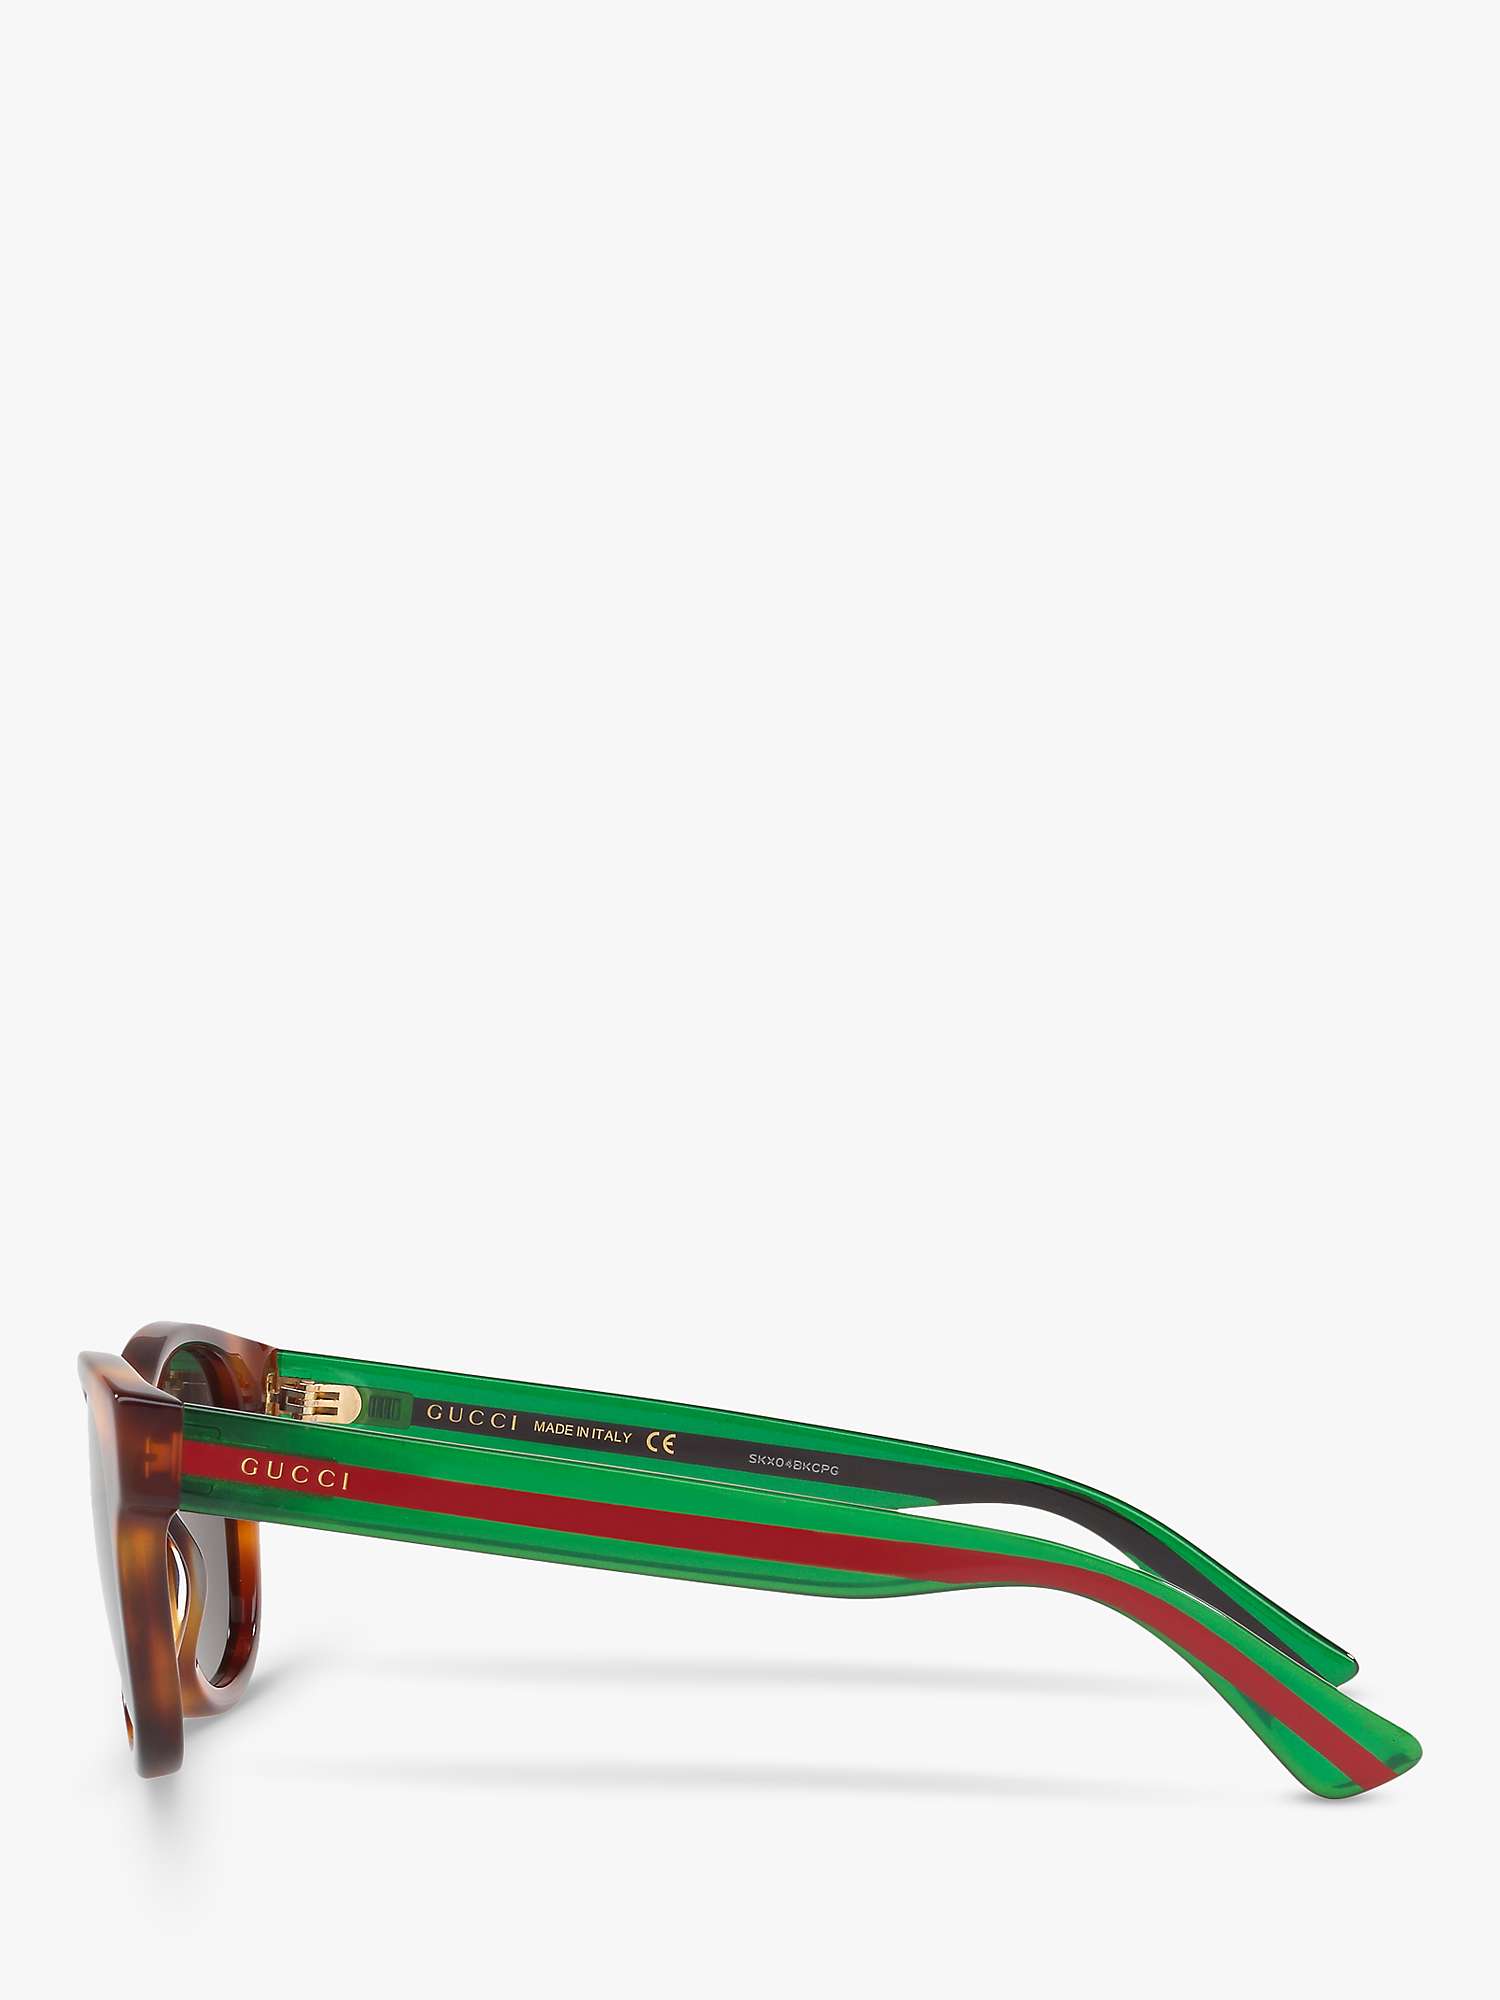 Buy Gucci GG0003SN Men's D-Frame Sunglasses, Brown/Grey Online at johnlewis.com